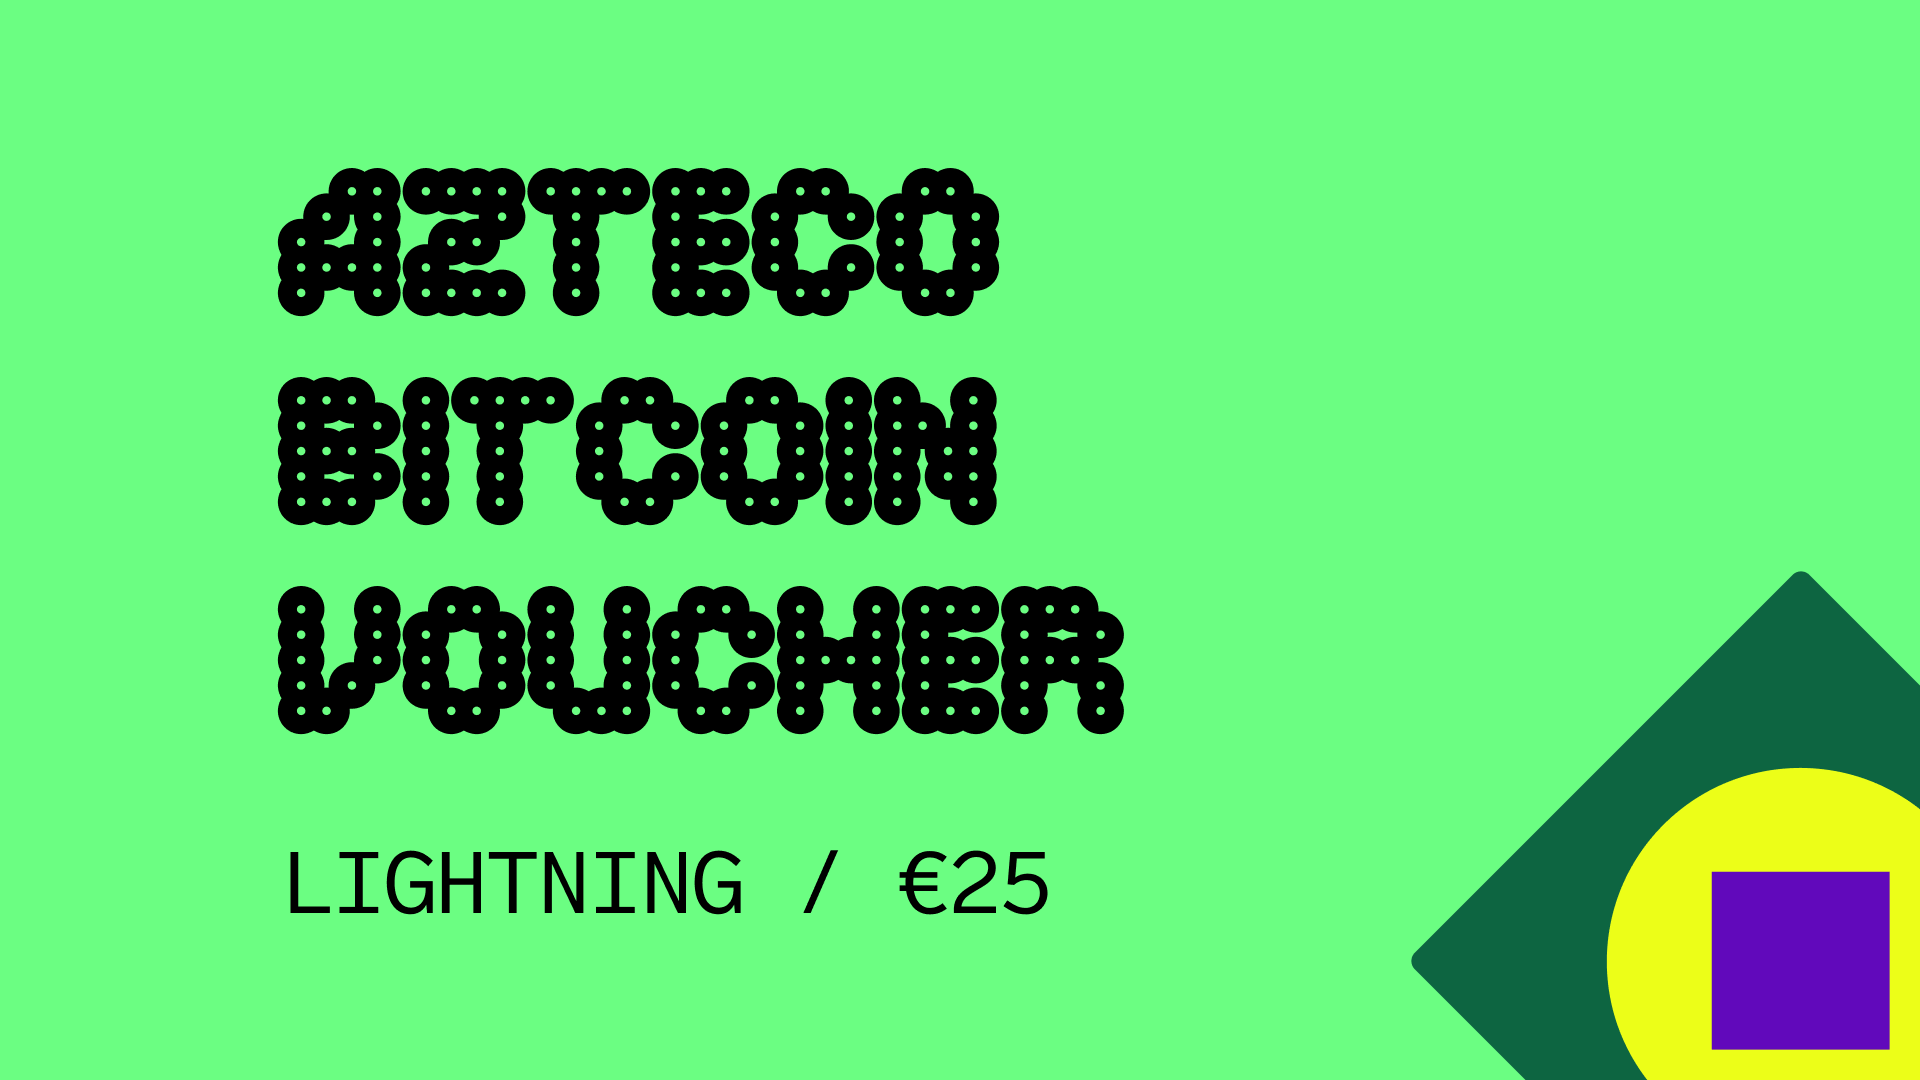 (28.25$) Azteco Bitcoin Lighting €25 Voucher